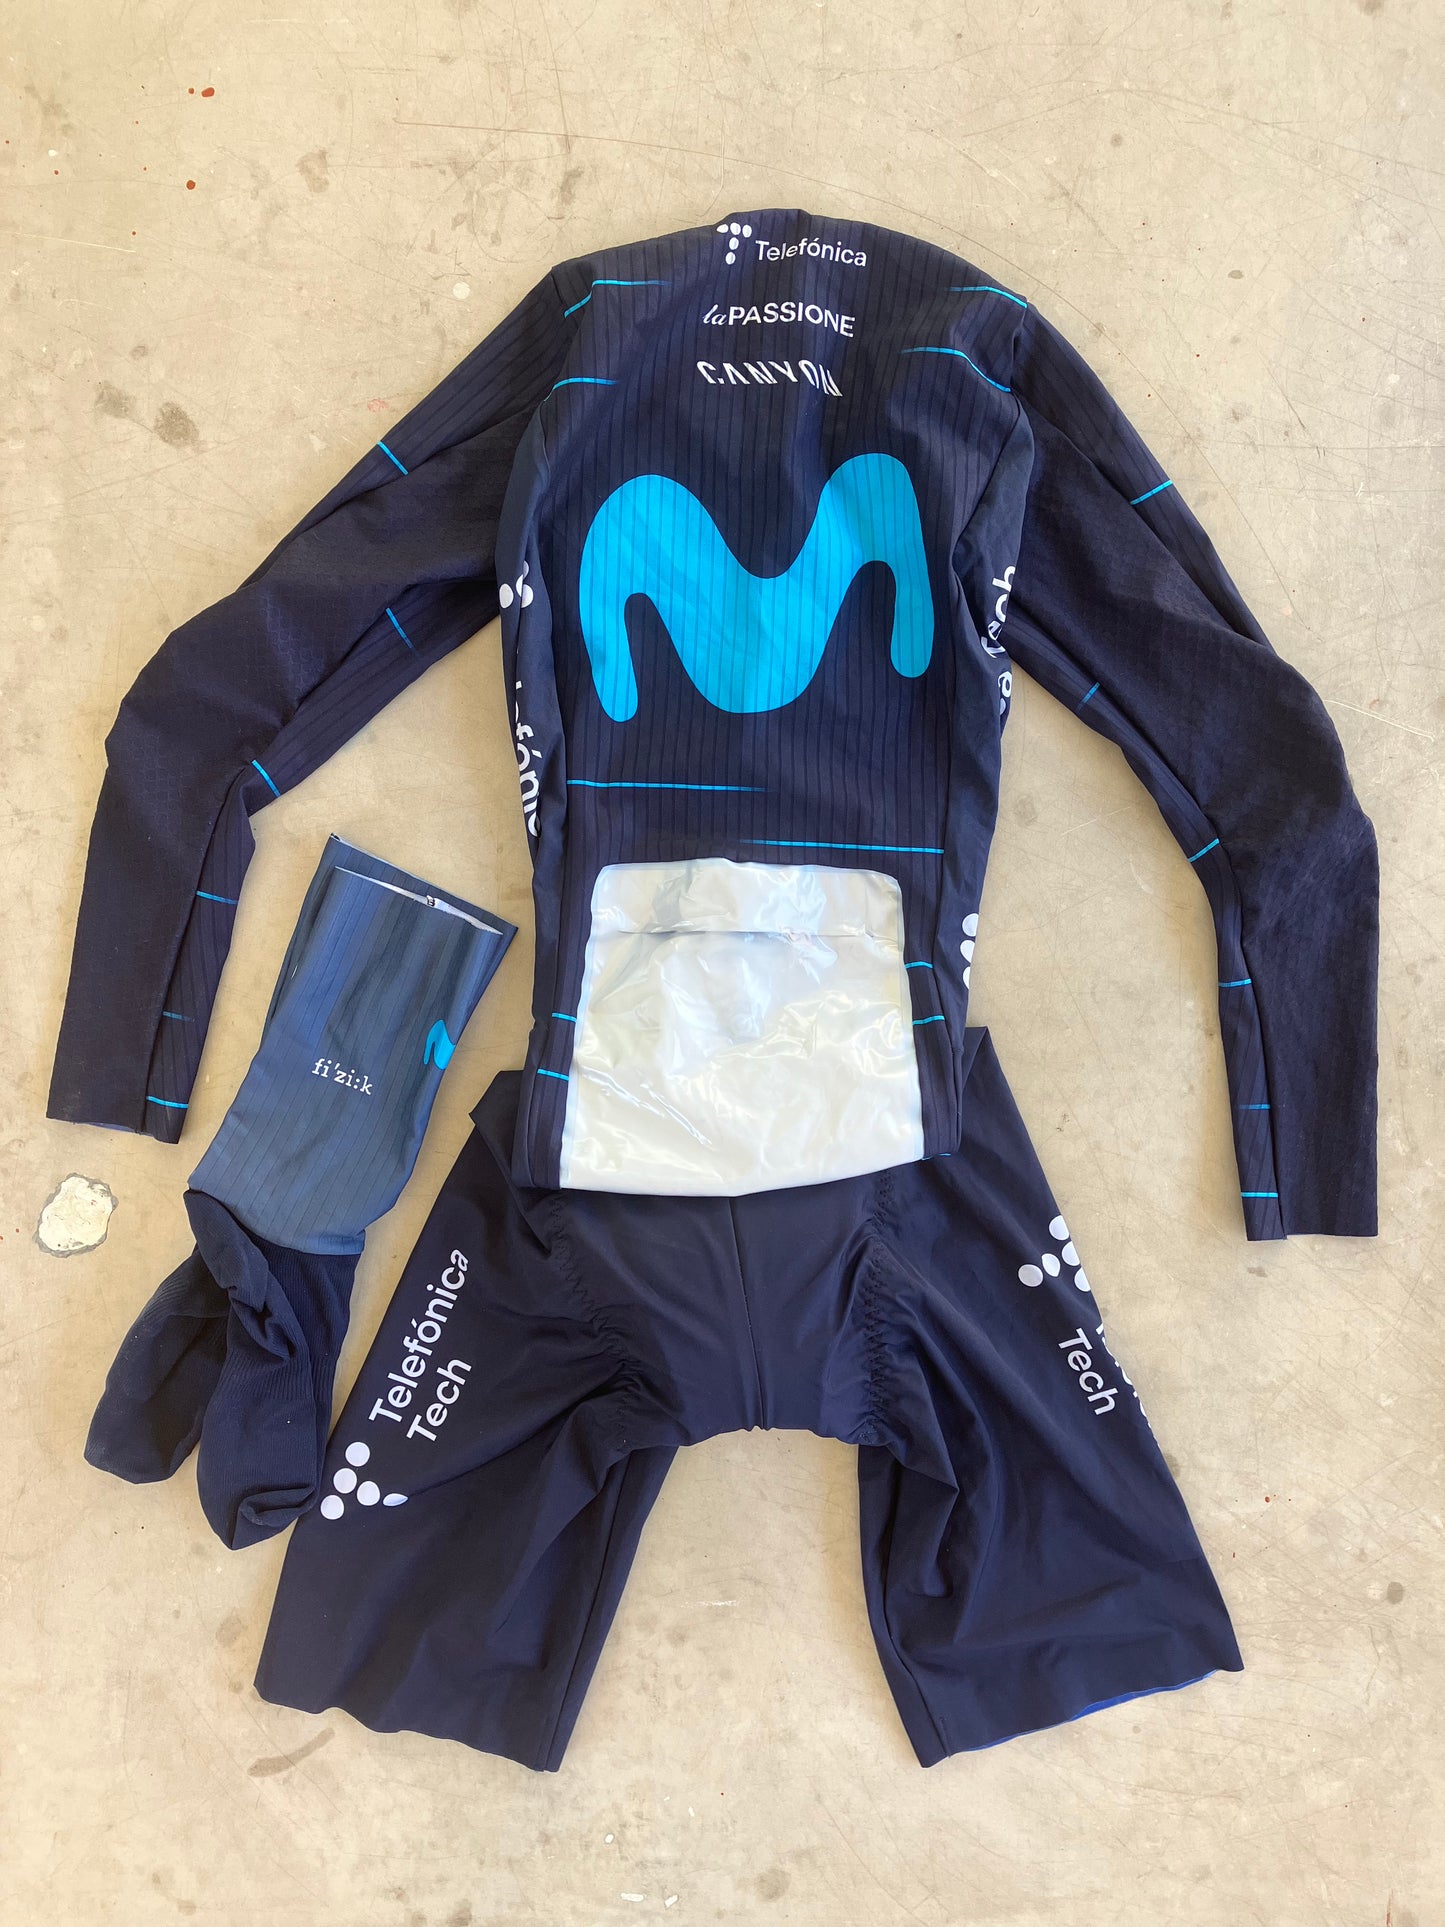 Movistar | La Passione Bundle - TT Suit and Aero Socks | XS | Rider-Issued Pro Team Kit